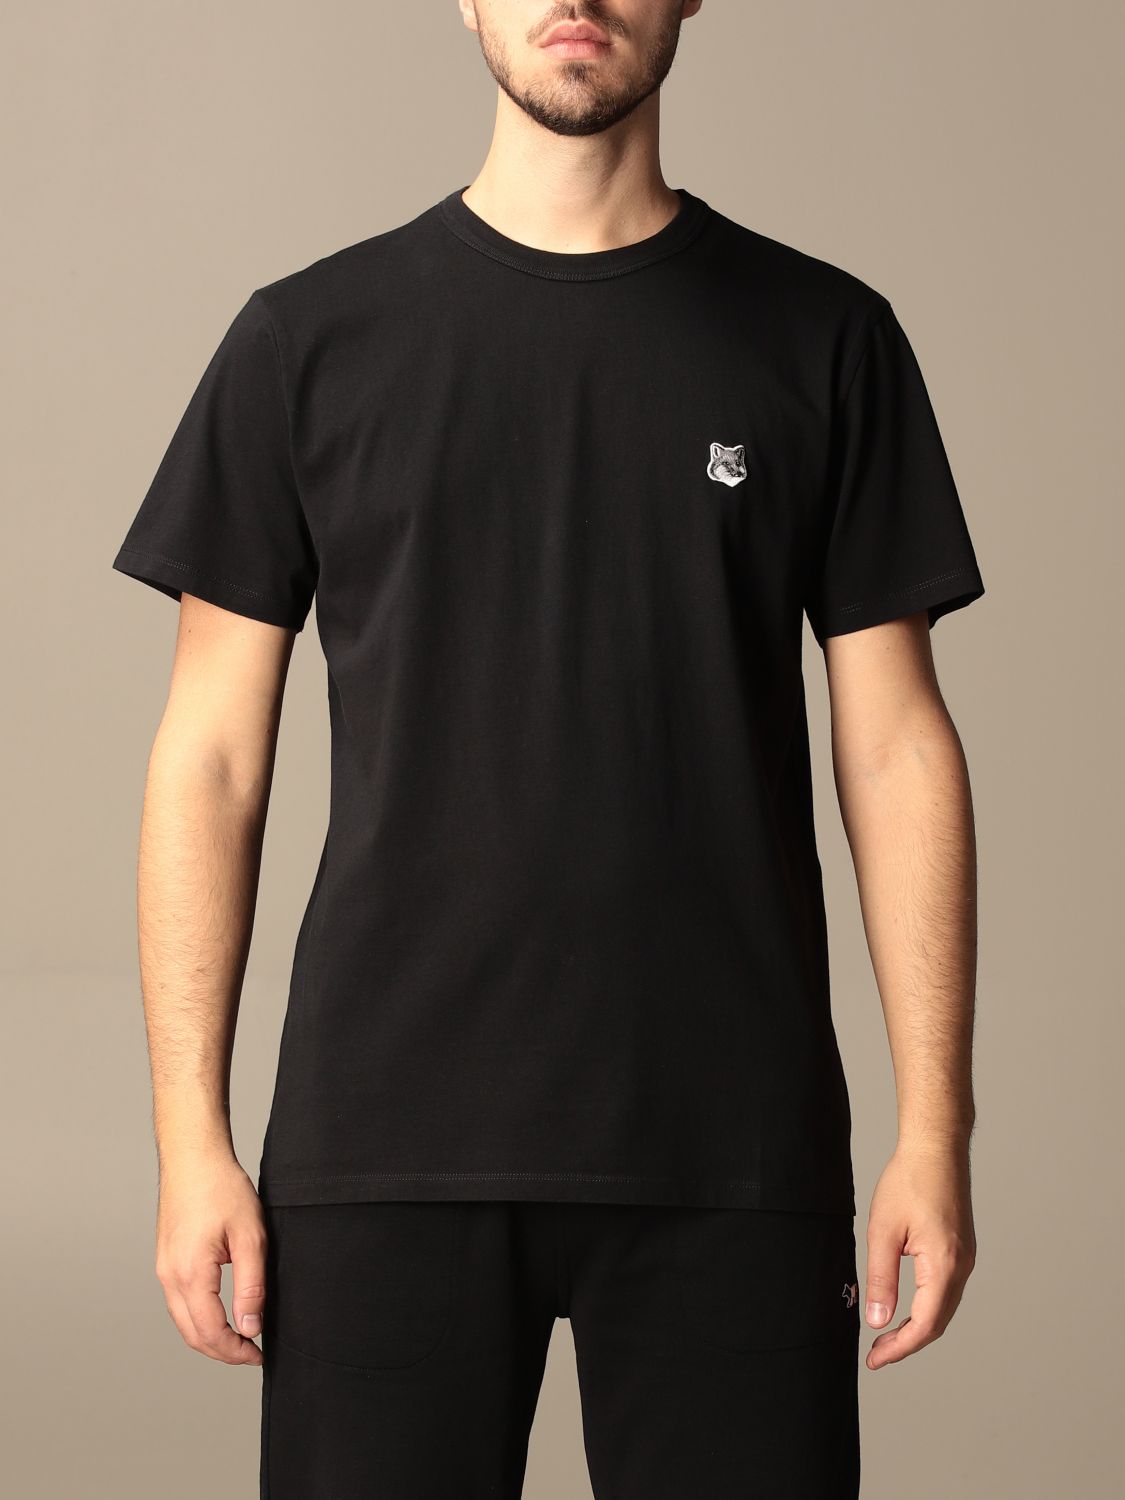 MAISON KITSUNÉ: t-shirt in cotton with logo - Black | Maison Kitsuné t ...